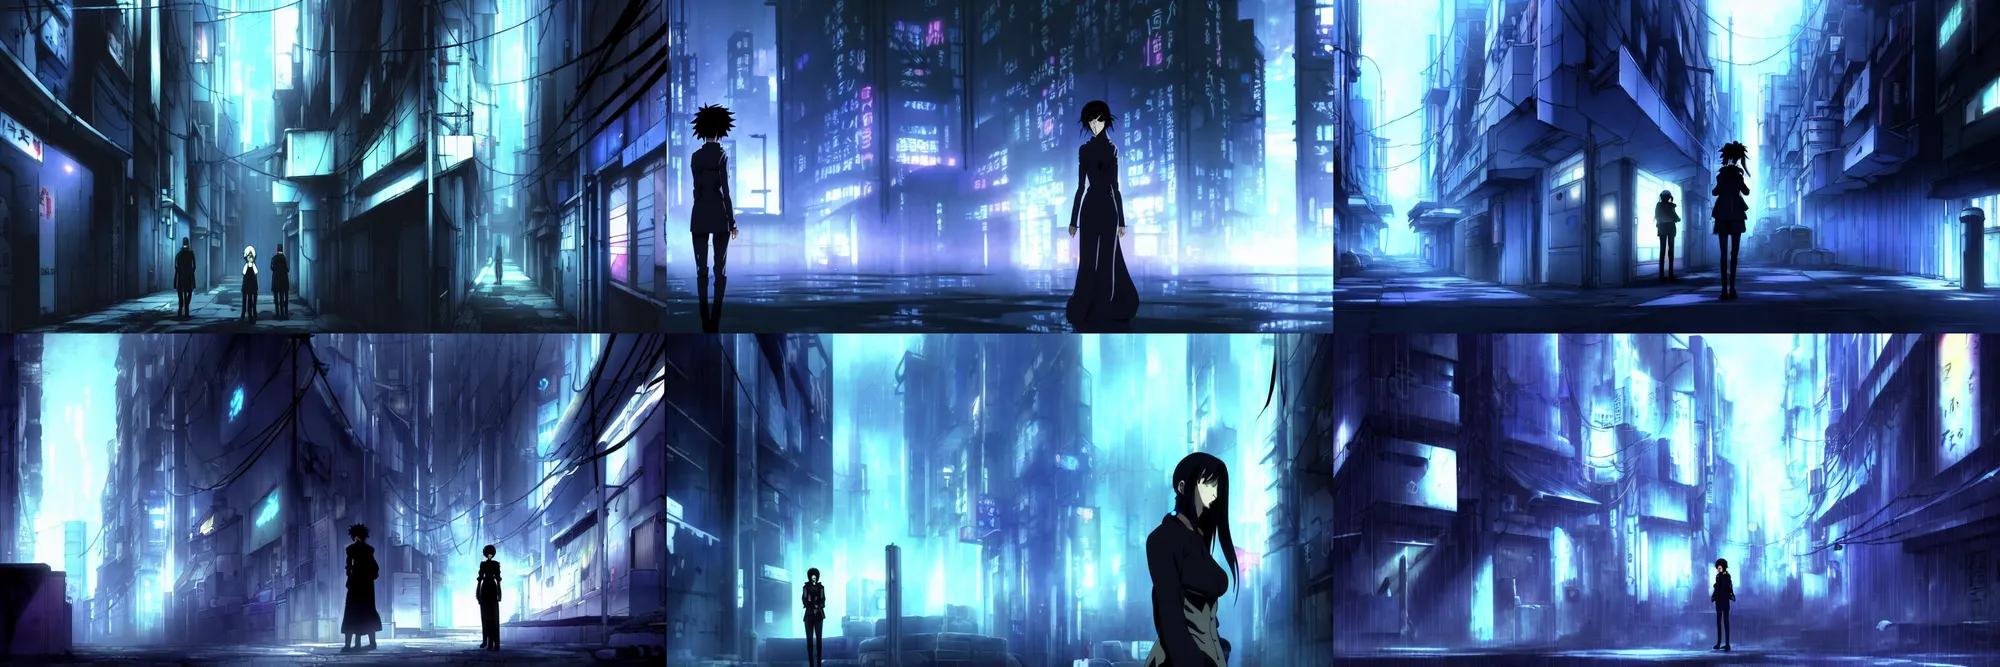 Dark Anime Scenery Wallpaper High Quality, Dark Anime Scene…